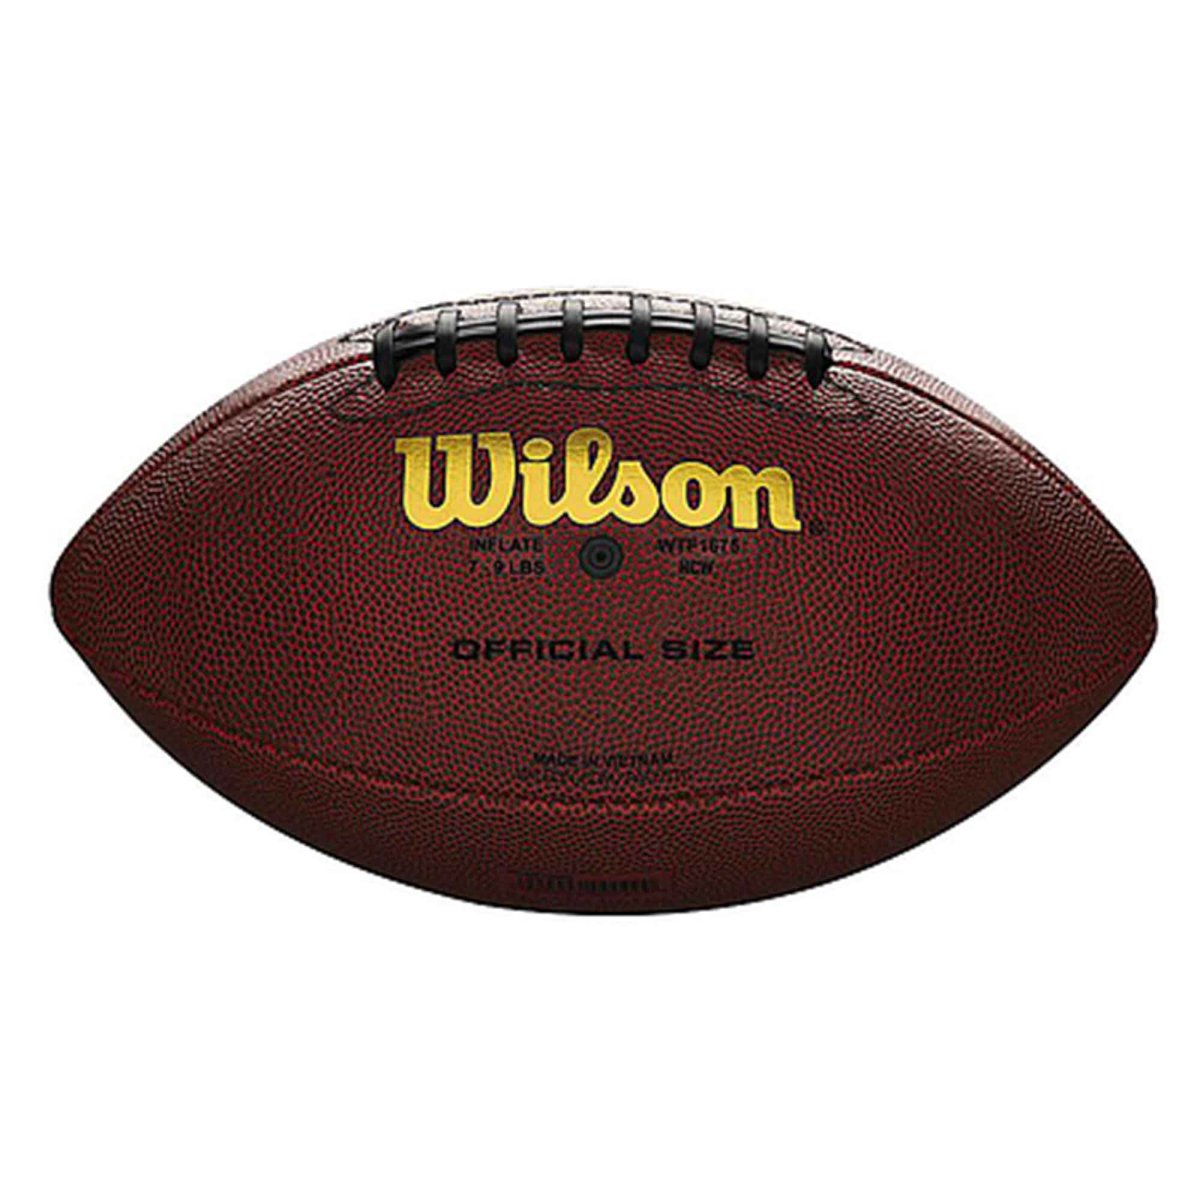 samtale definitive ankel Wilson NFL Tailgate American Football - Amerikansk Fodbold - Sportsbag